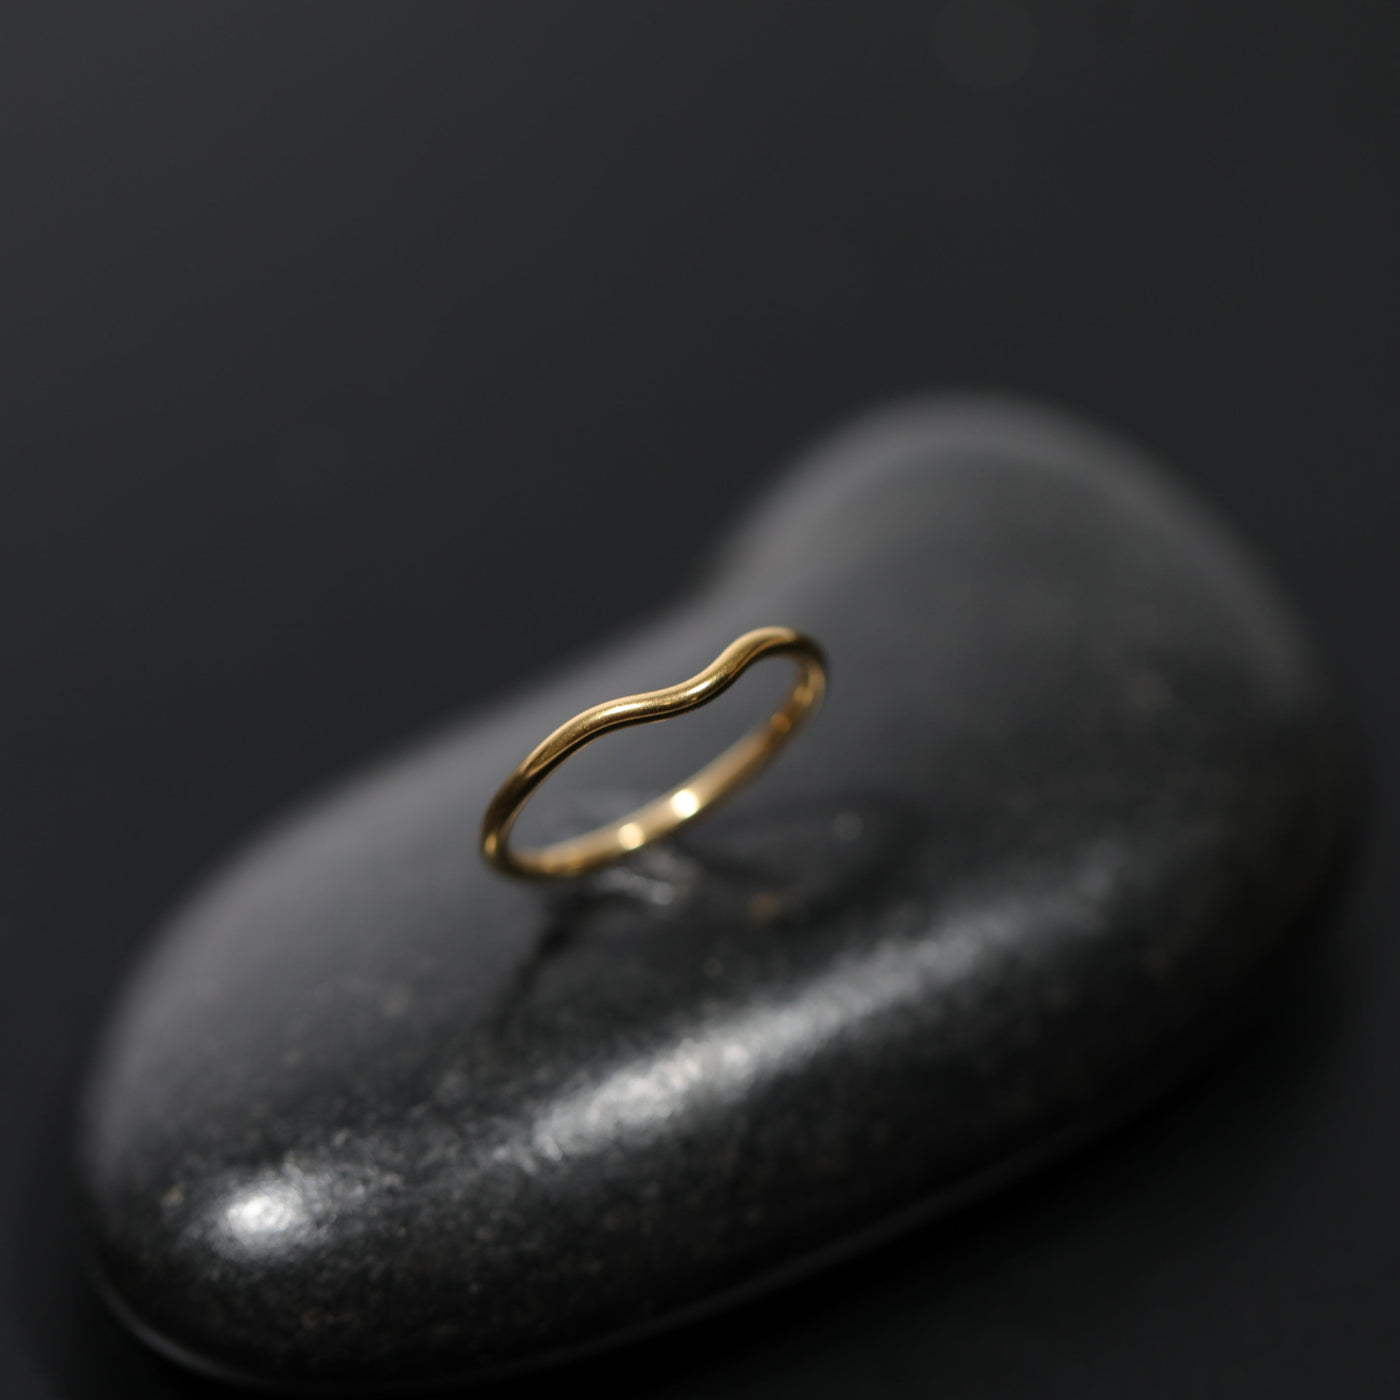 18K Gold-Filled Arrow Ring